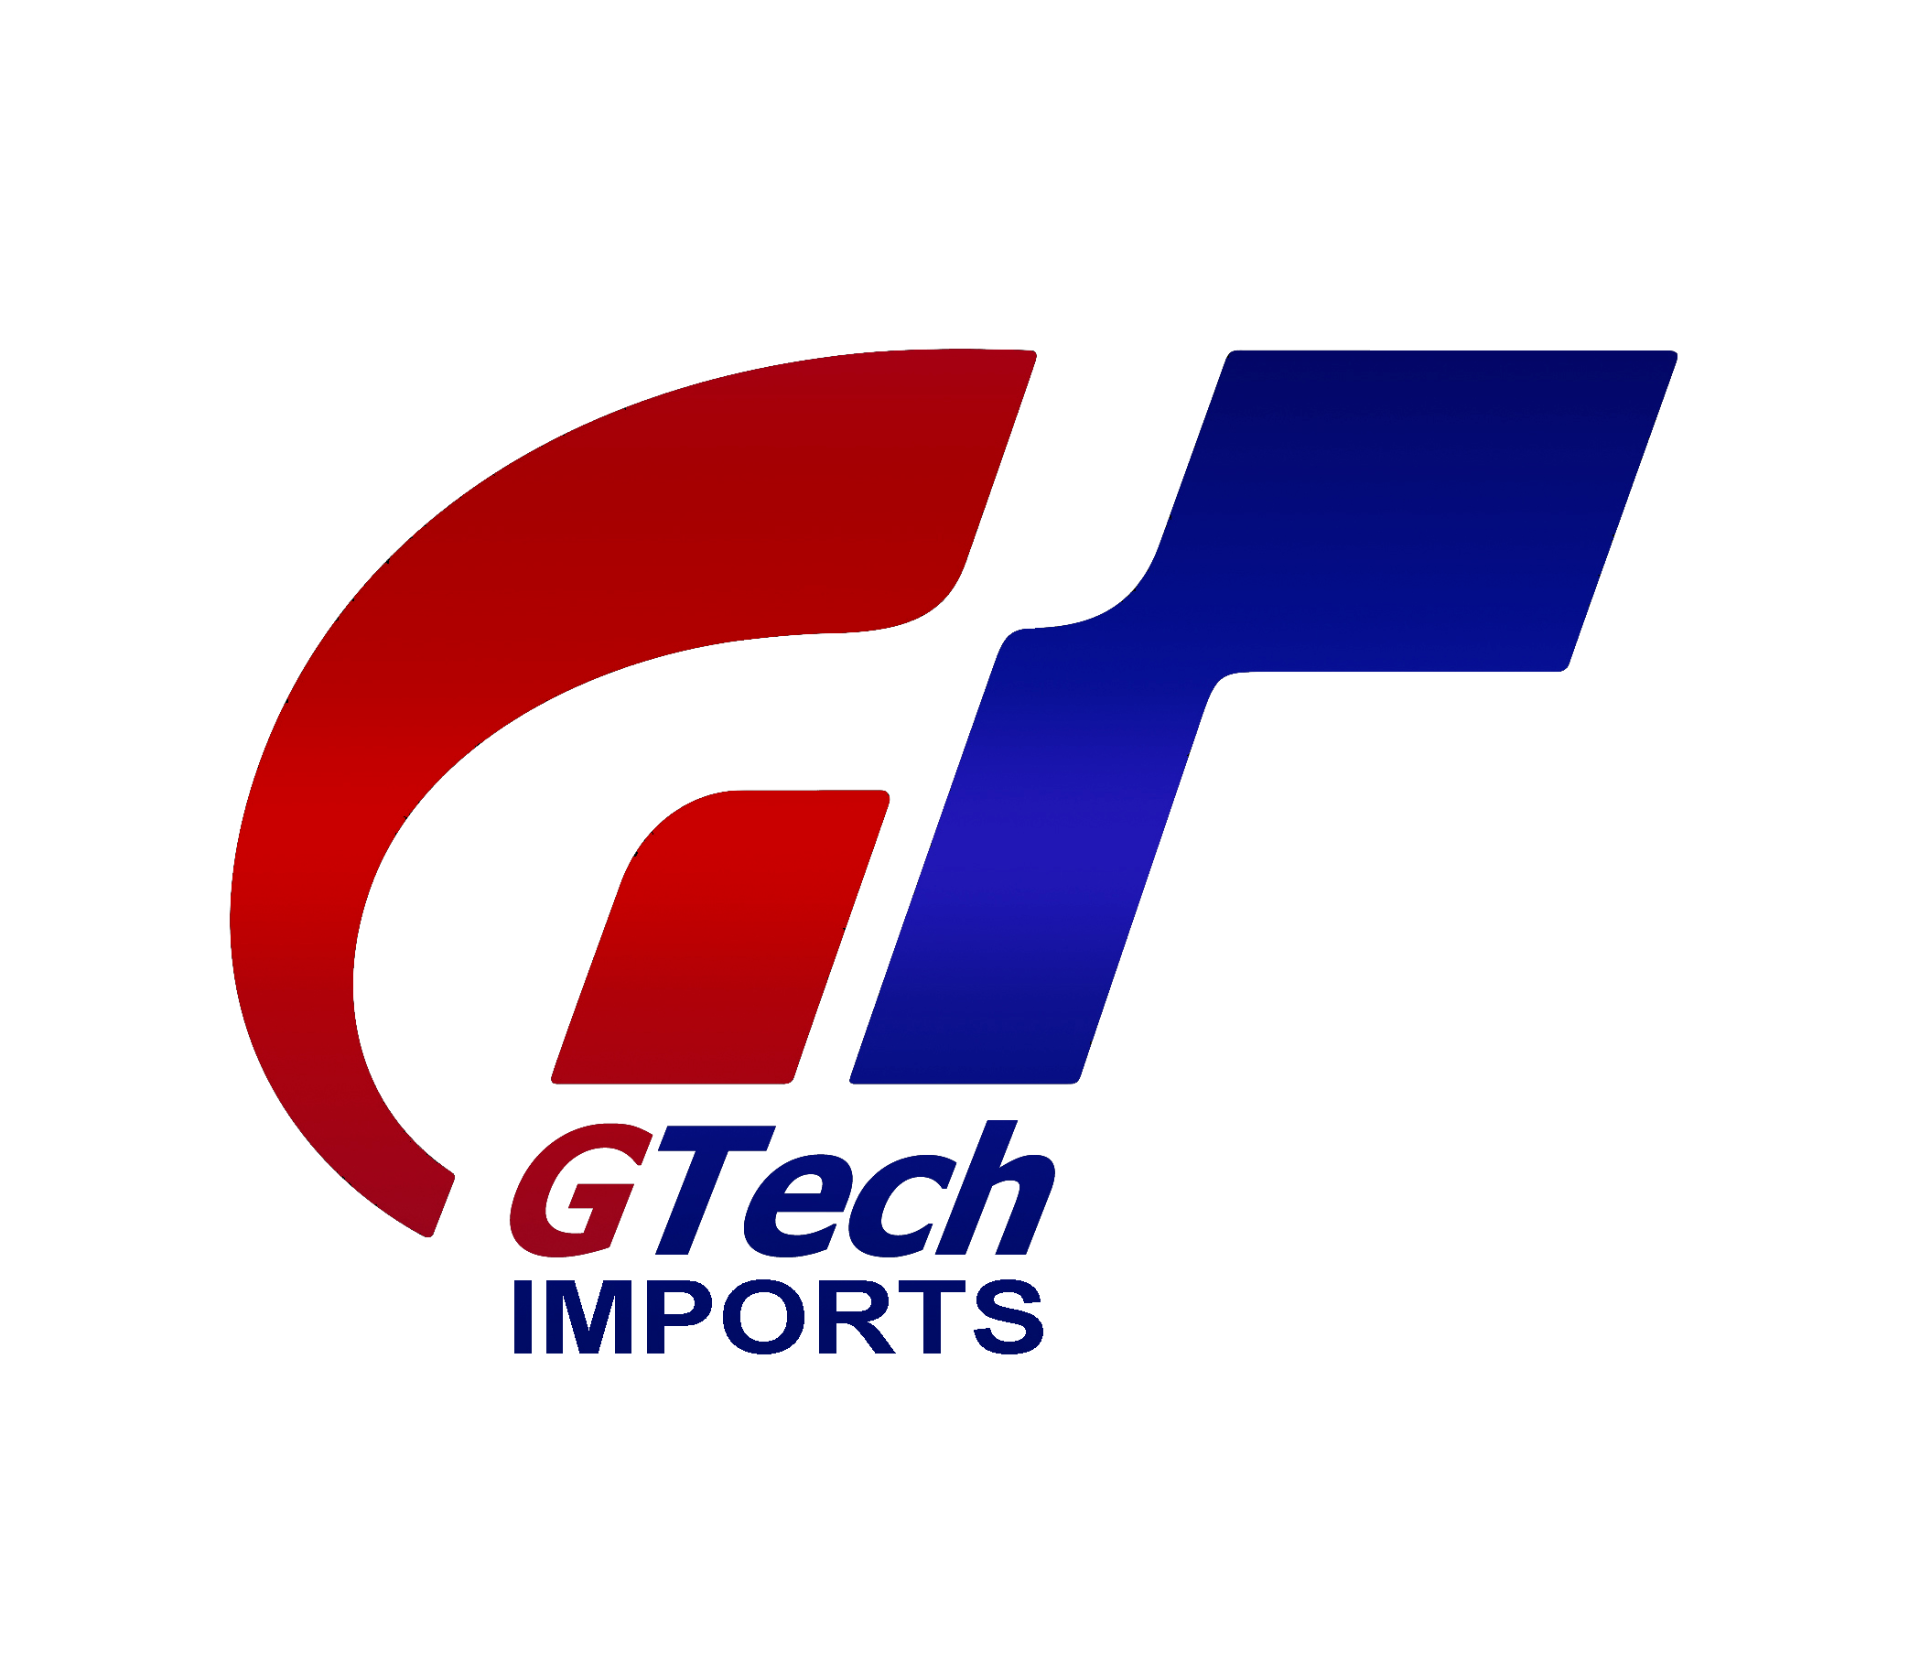 GTech Imports